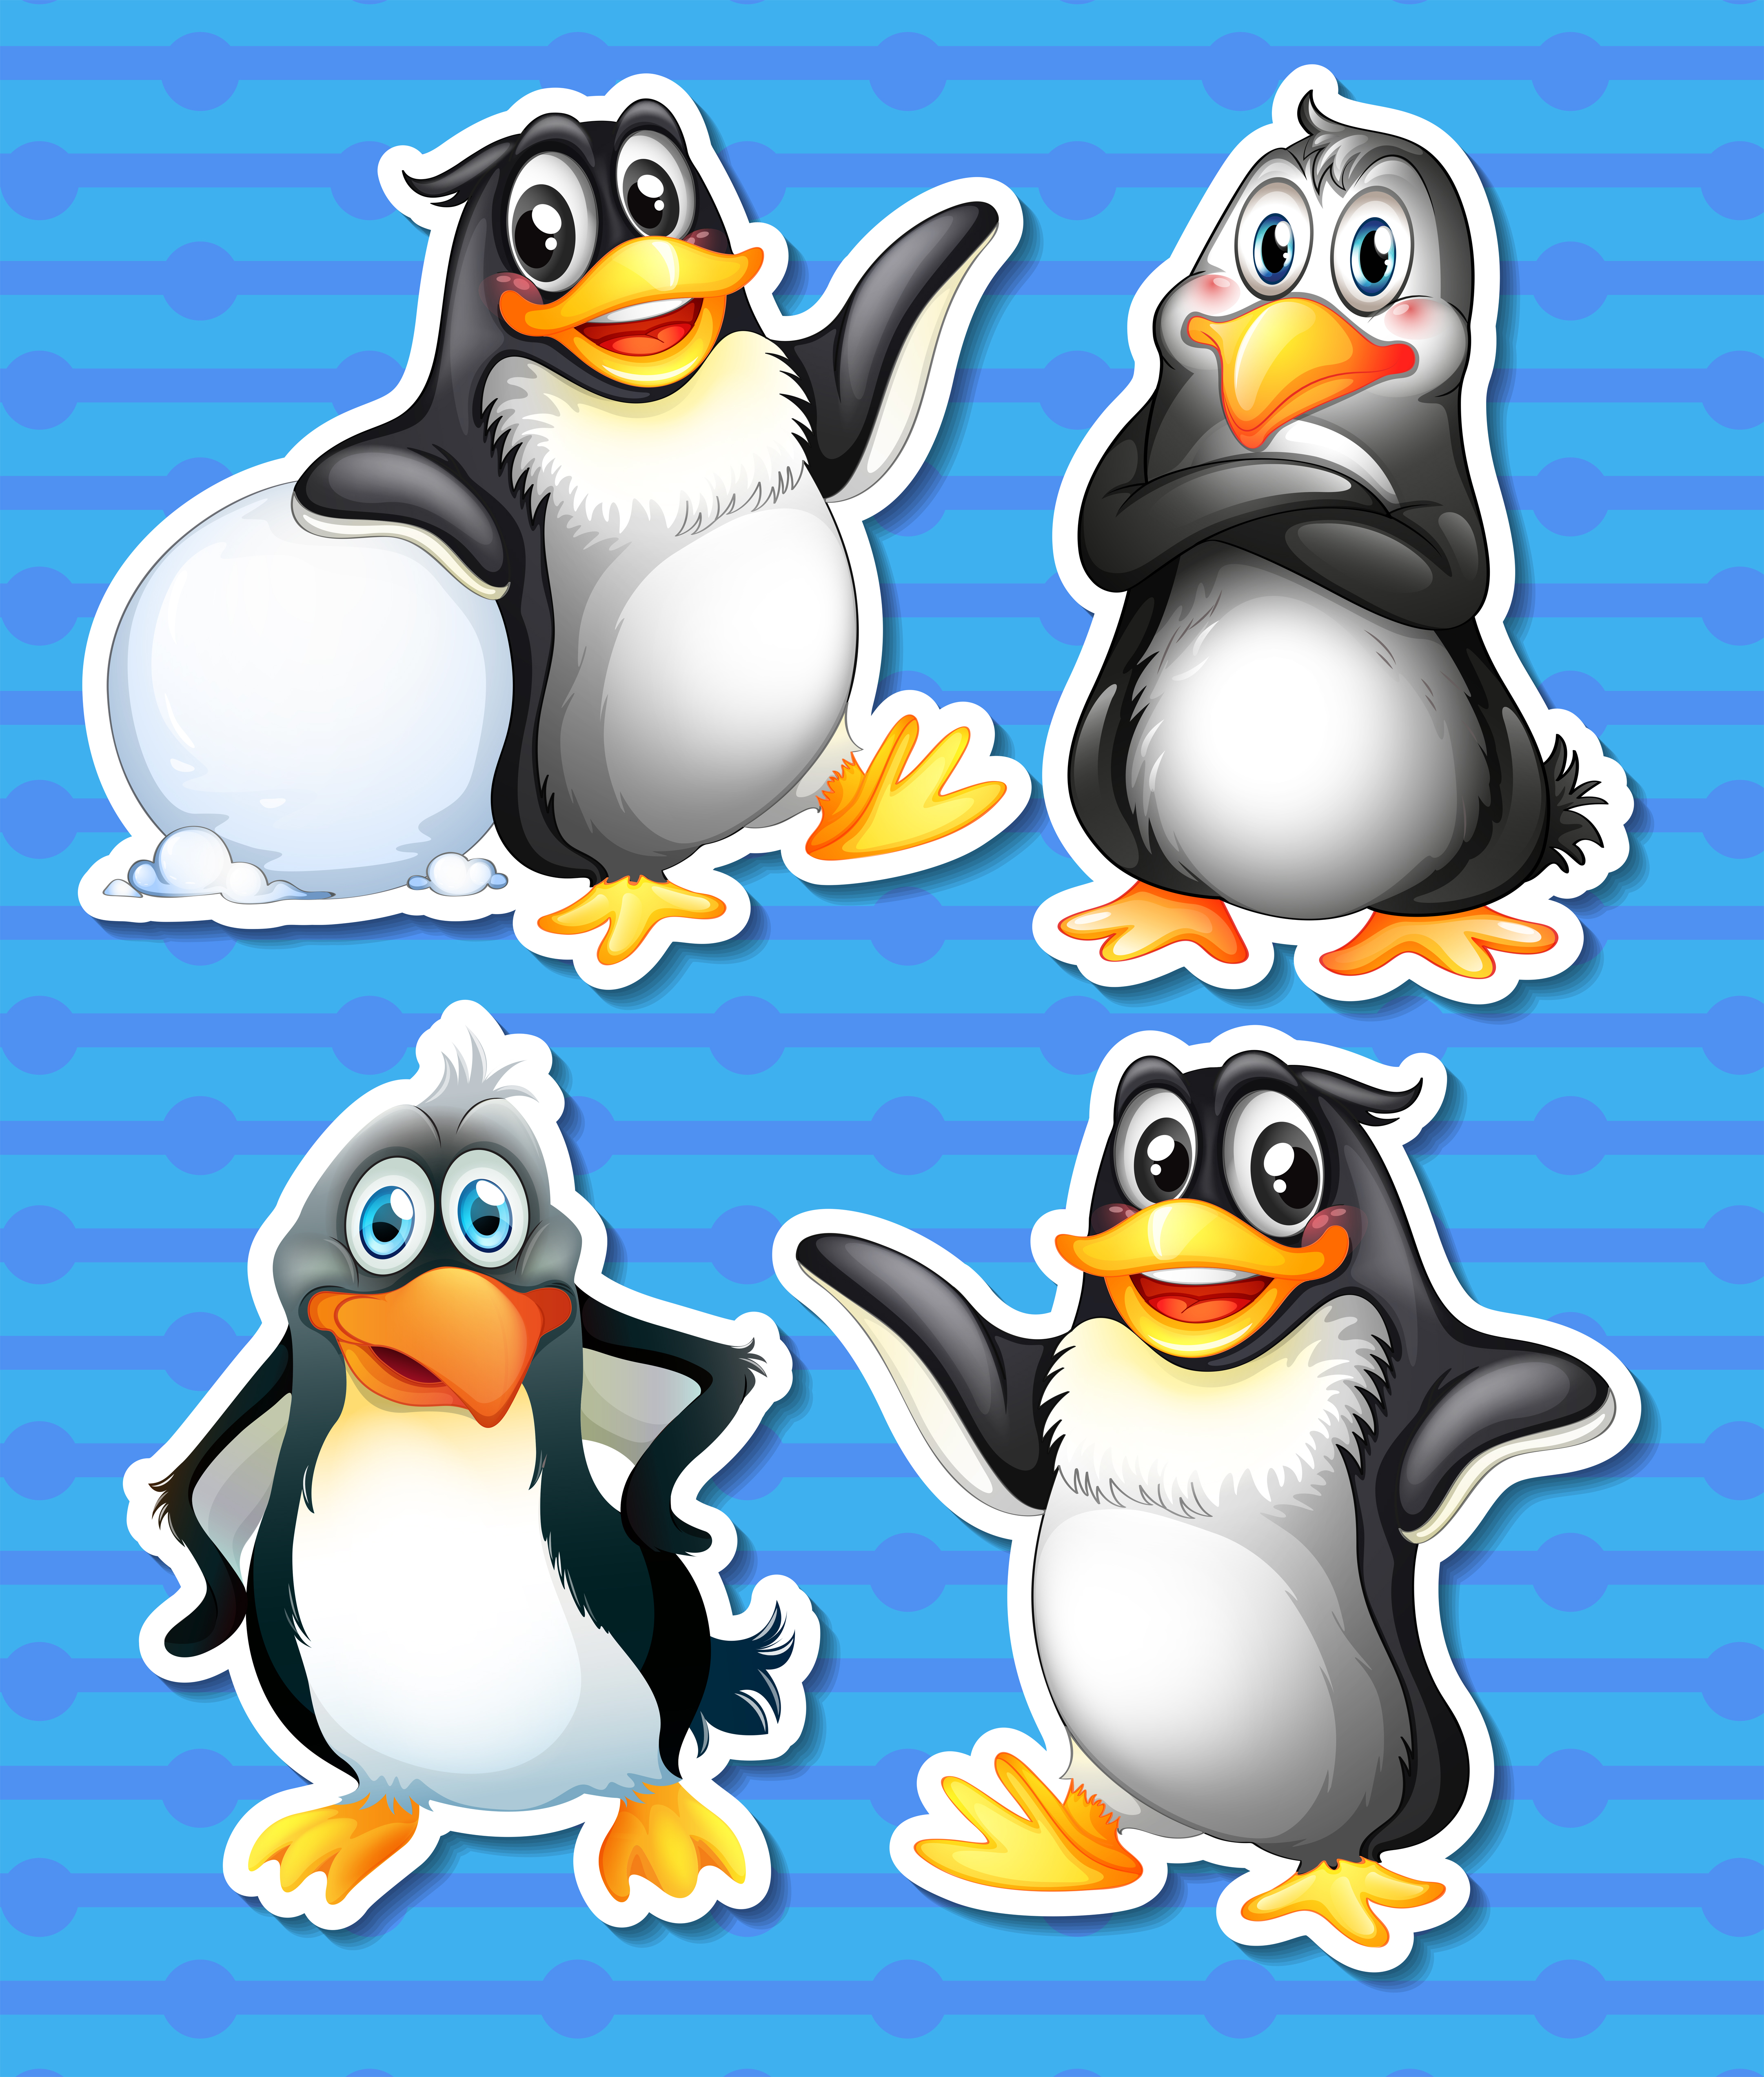 Penguin 432336 Download Free Vectors, Clipart Graphics